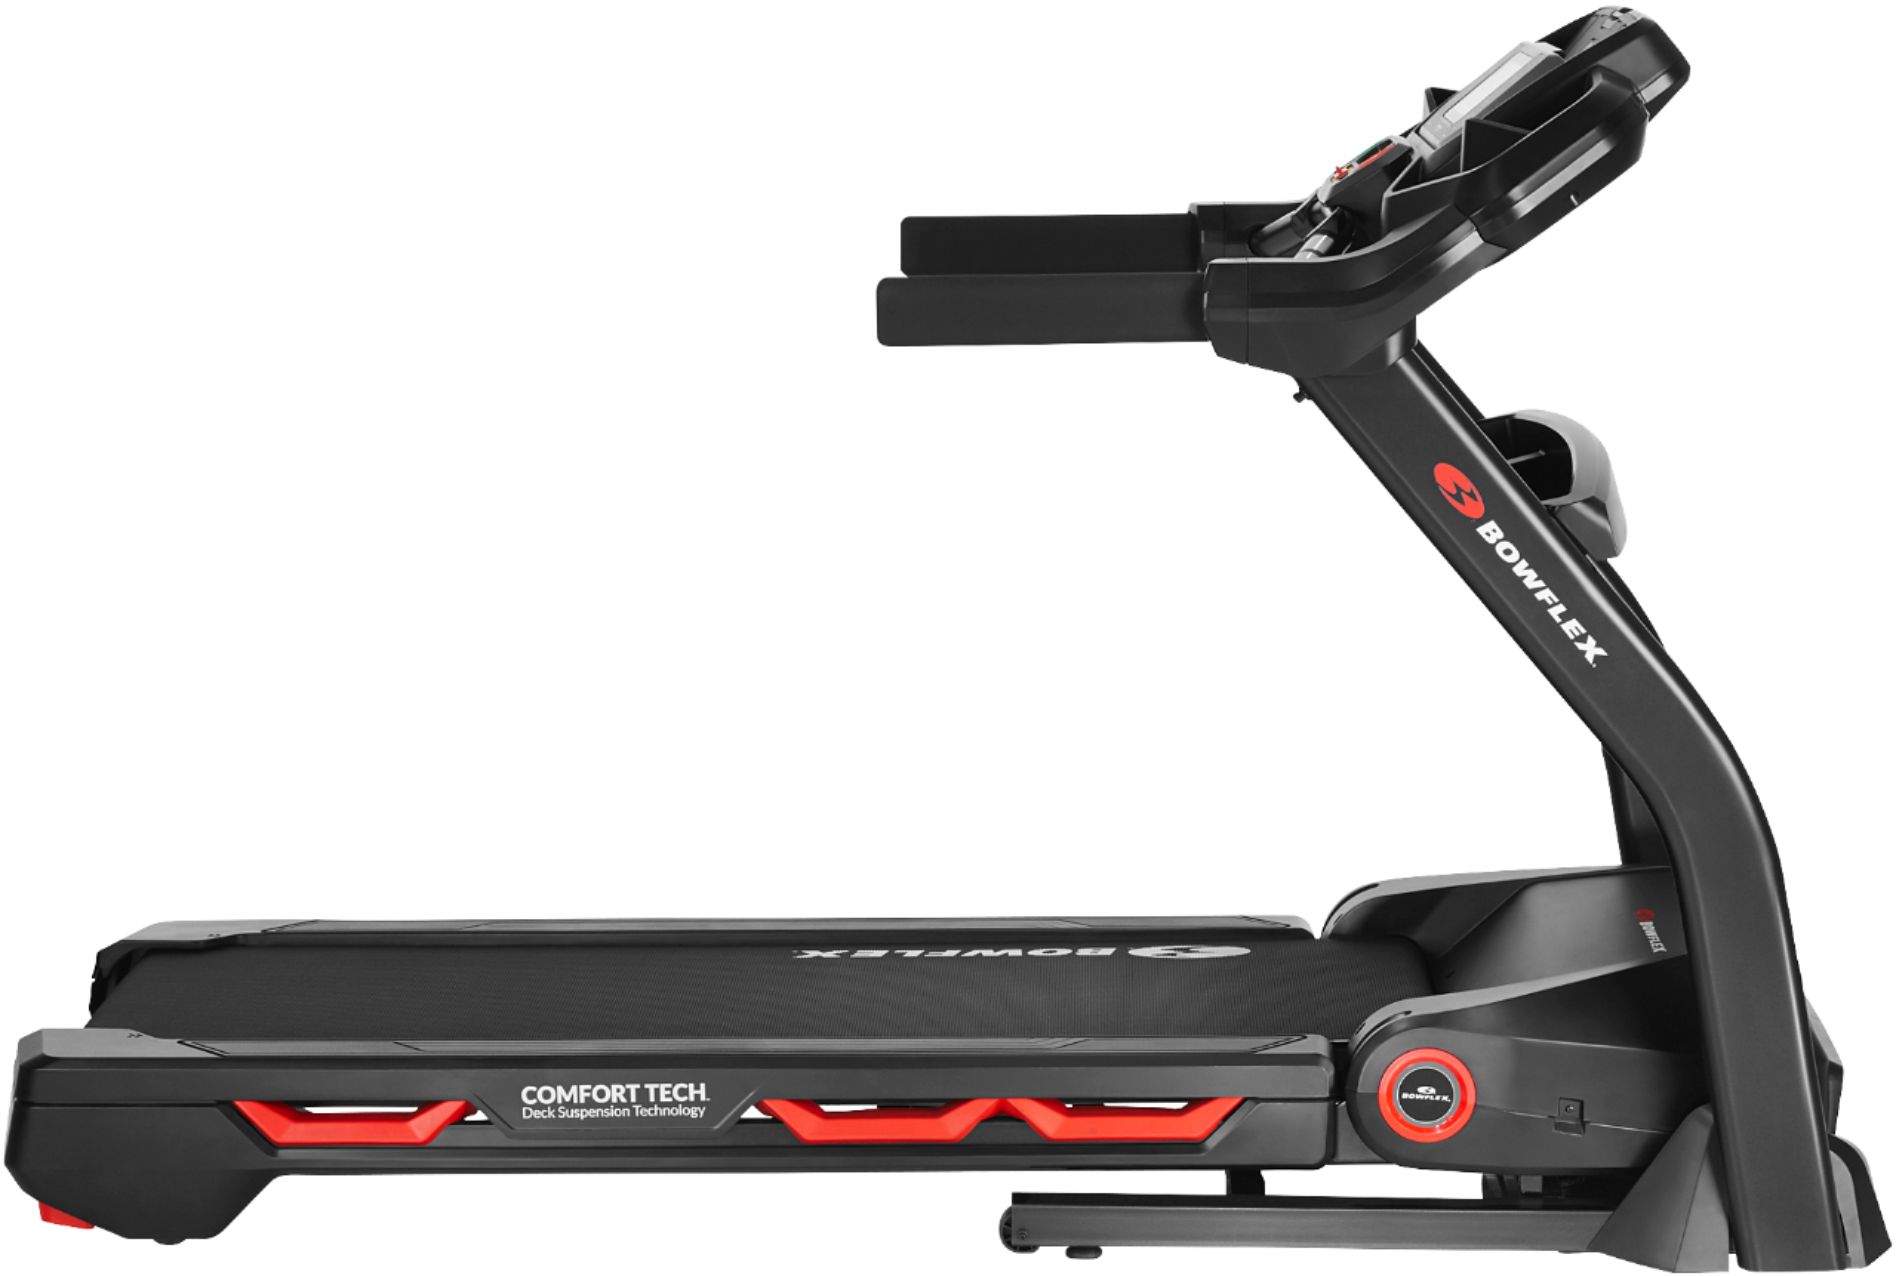 Angle View: Bowflex - Treadmill 7 - Black